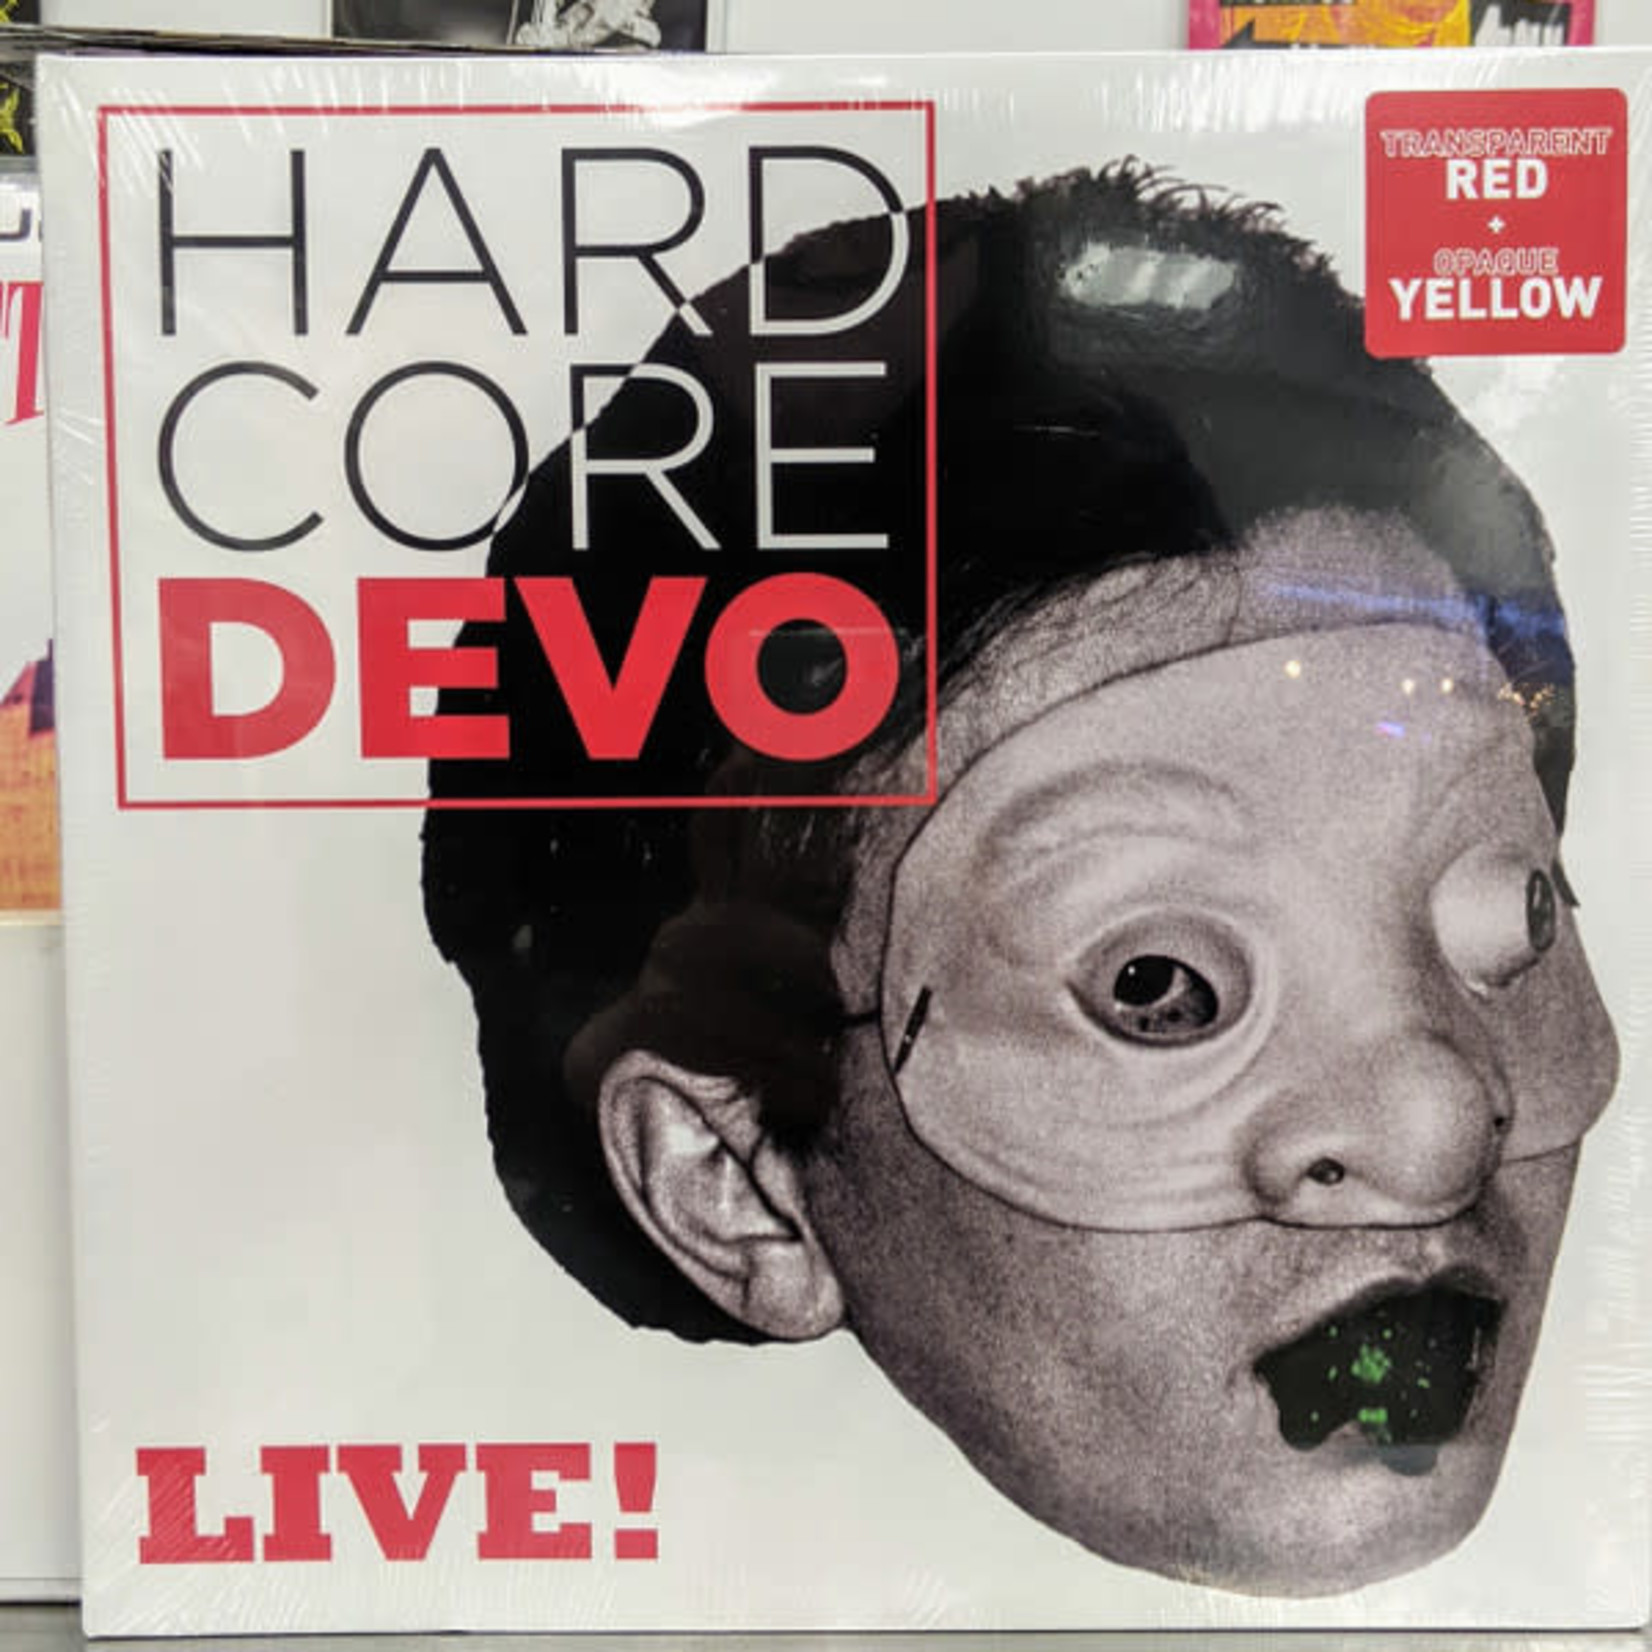 Devo - Hardcore Devo Live! (2LP) [Red/Yellow]